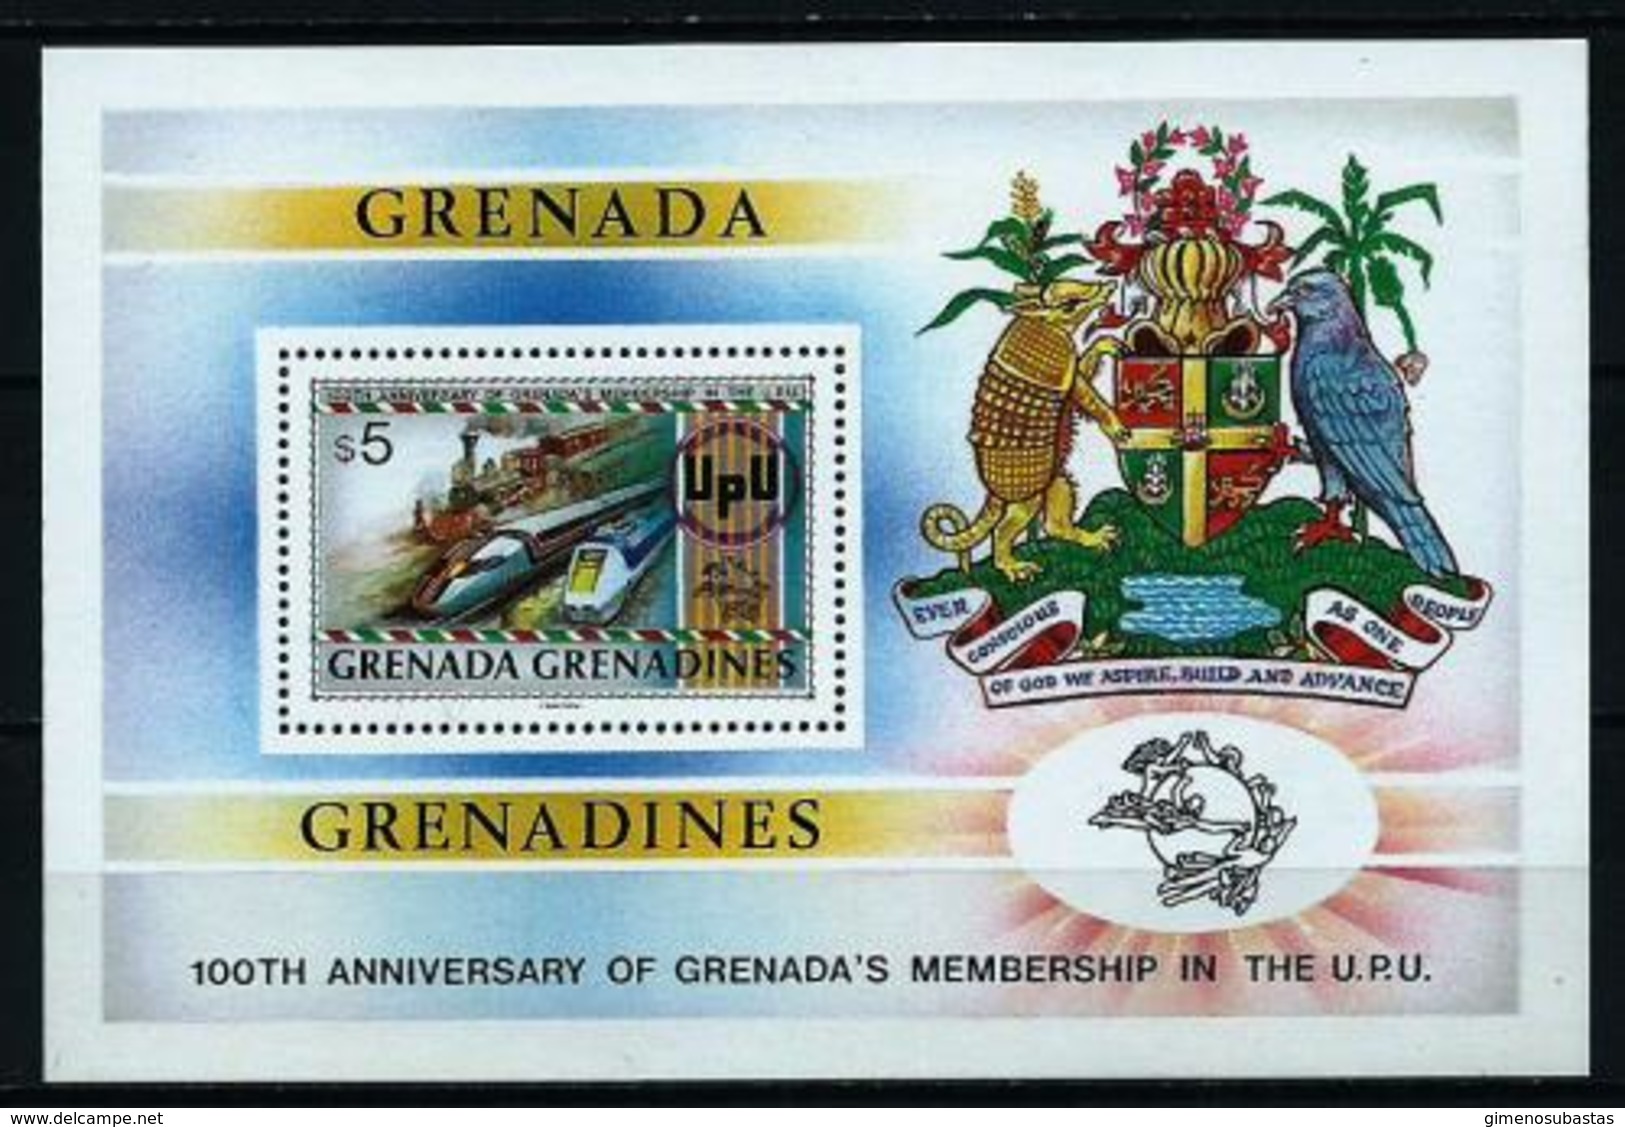 Granadinas (Grenada) Nº HB-61 Nuevo - Grenada (1974-...)